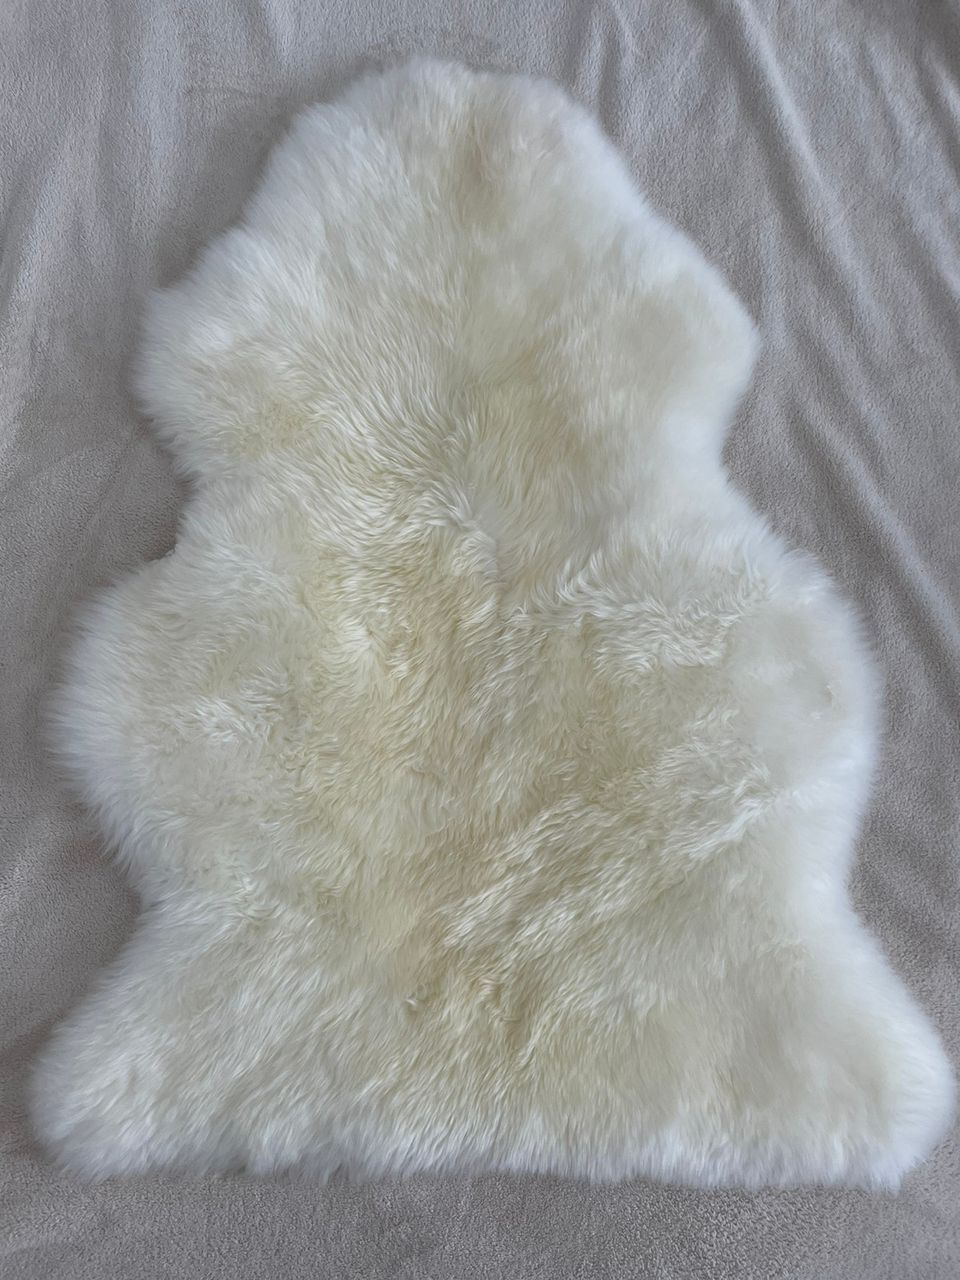 Ruskovilla - Infant care sheepskin rug